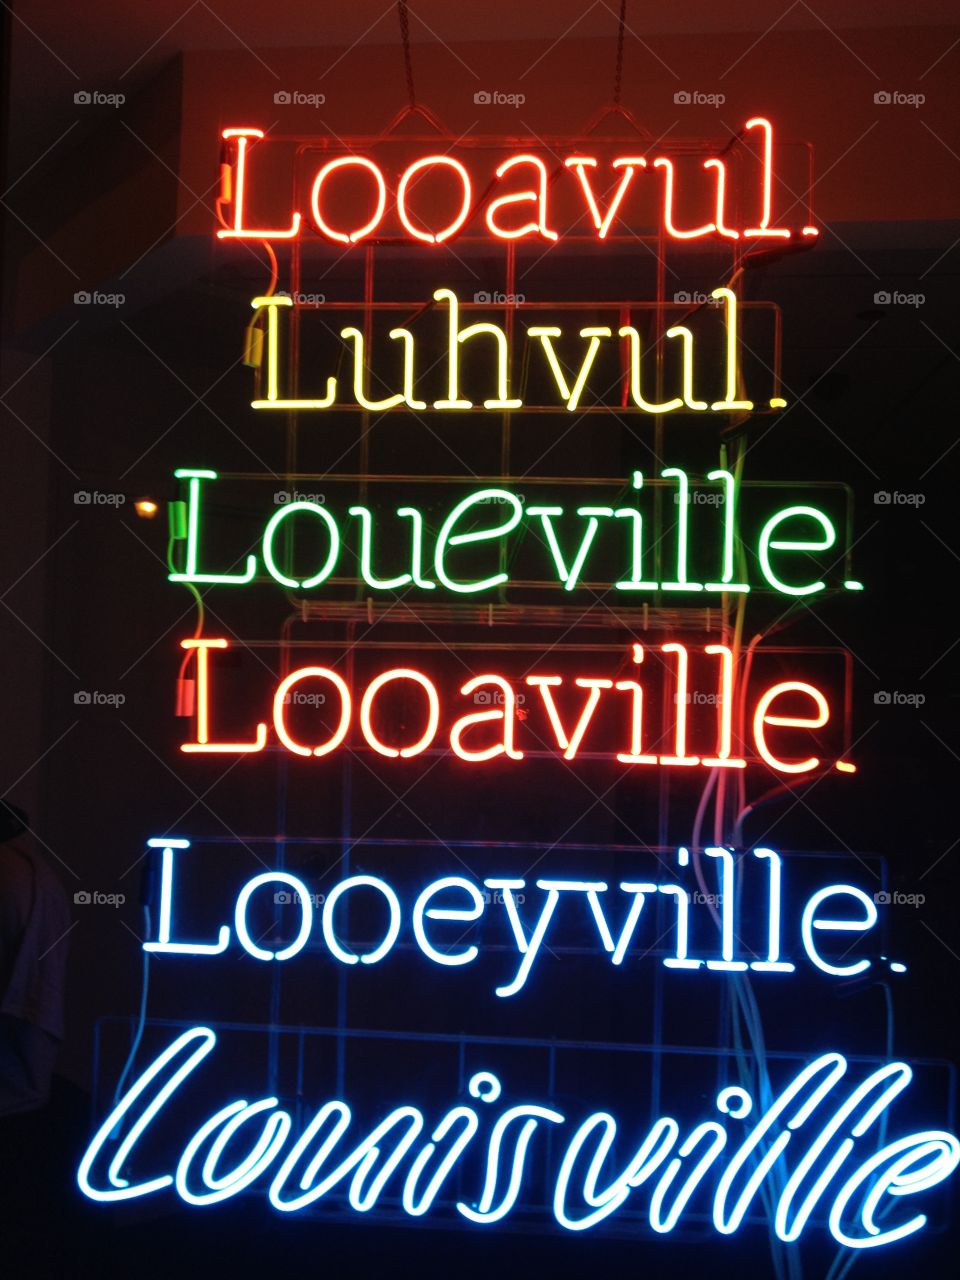 Louisville lights. Sign in Louisville 